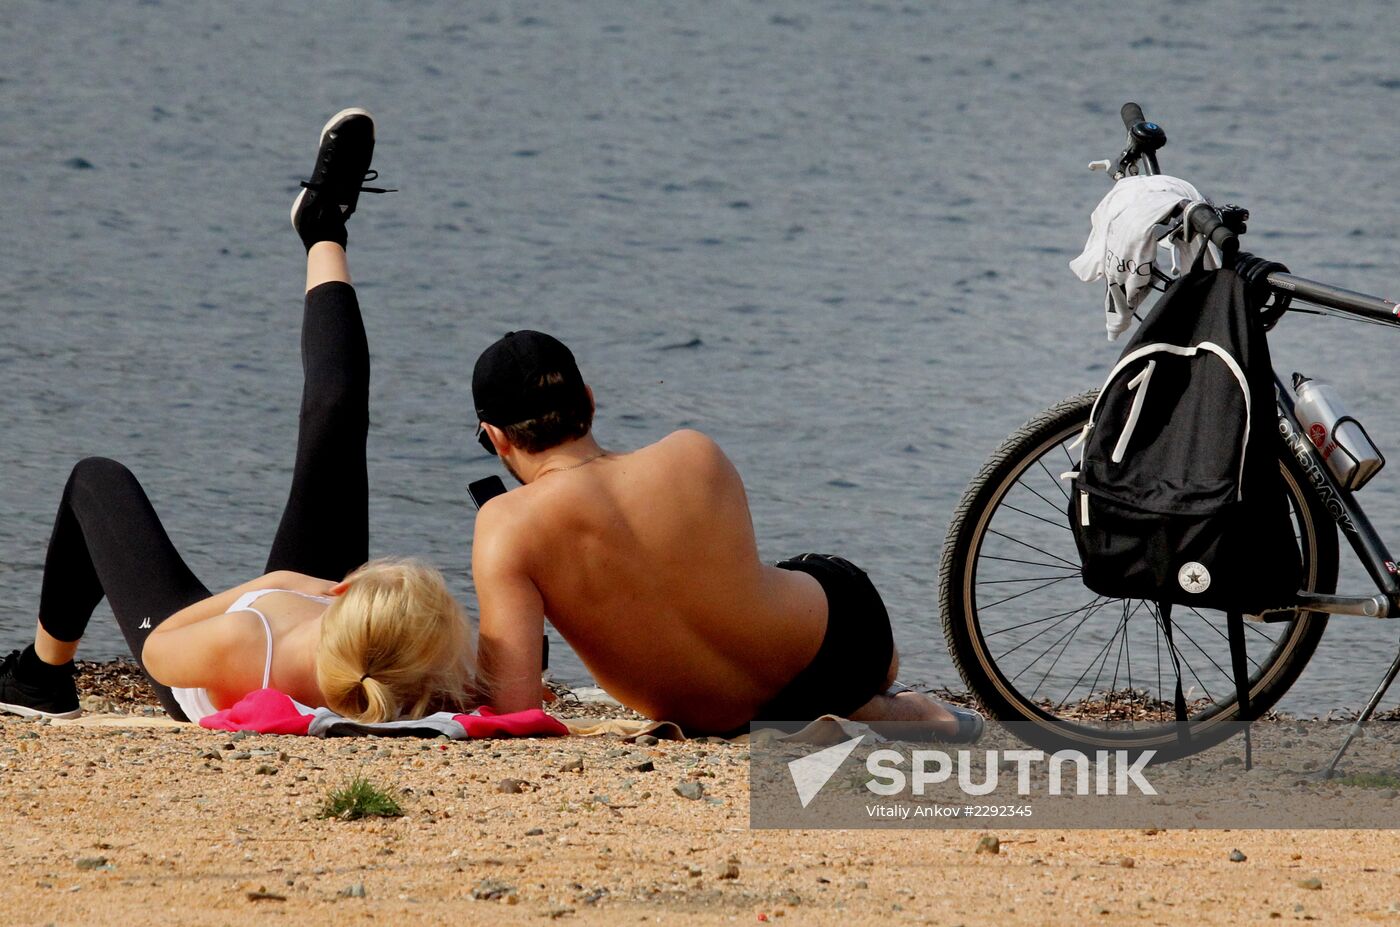 Bicycle picnic on Russky Island in Vladivostok